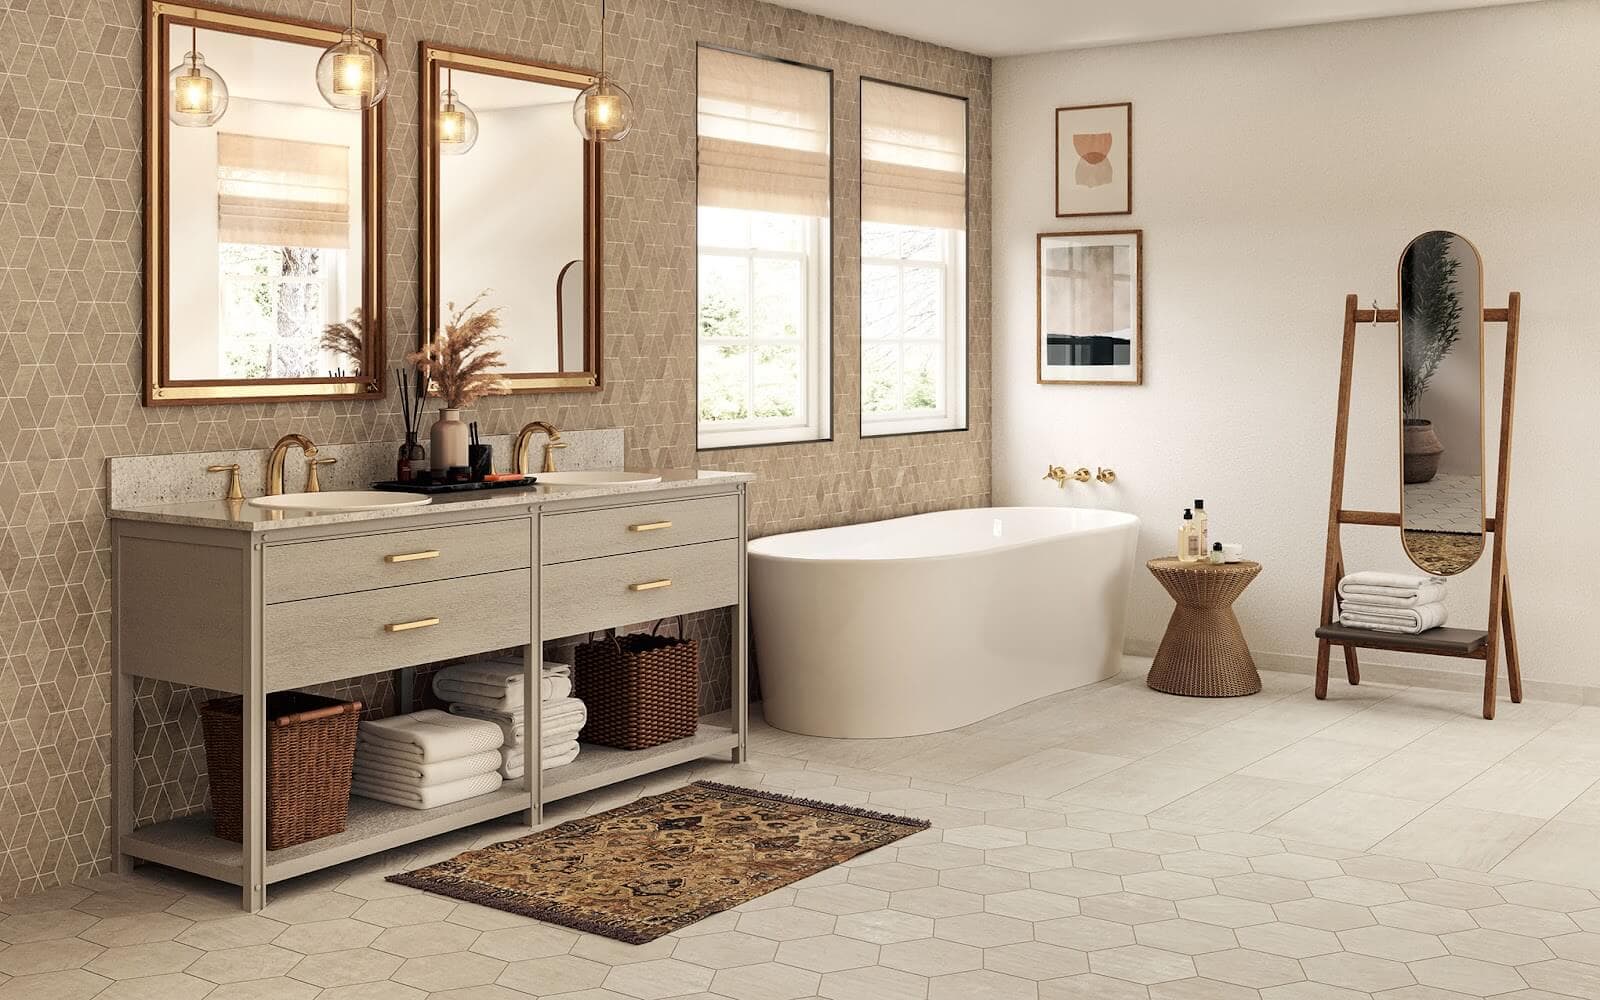 boho modern bathroom farmhouse design with wallpaper-look tile and a ceramic tile pattern